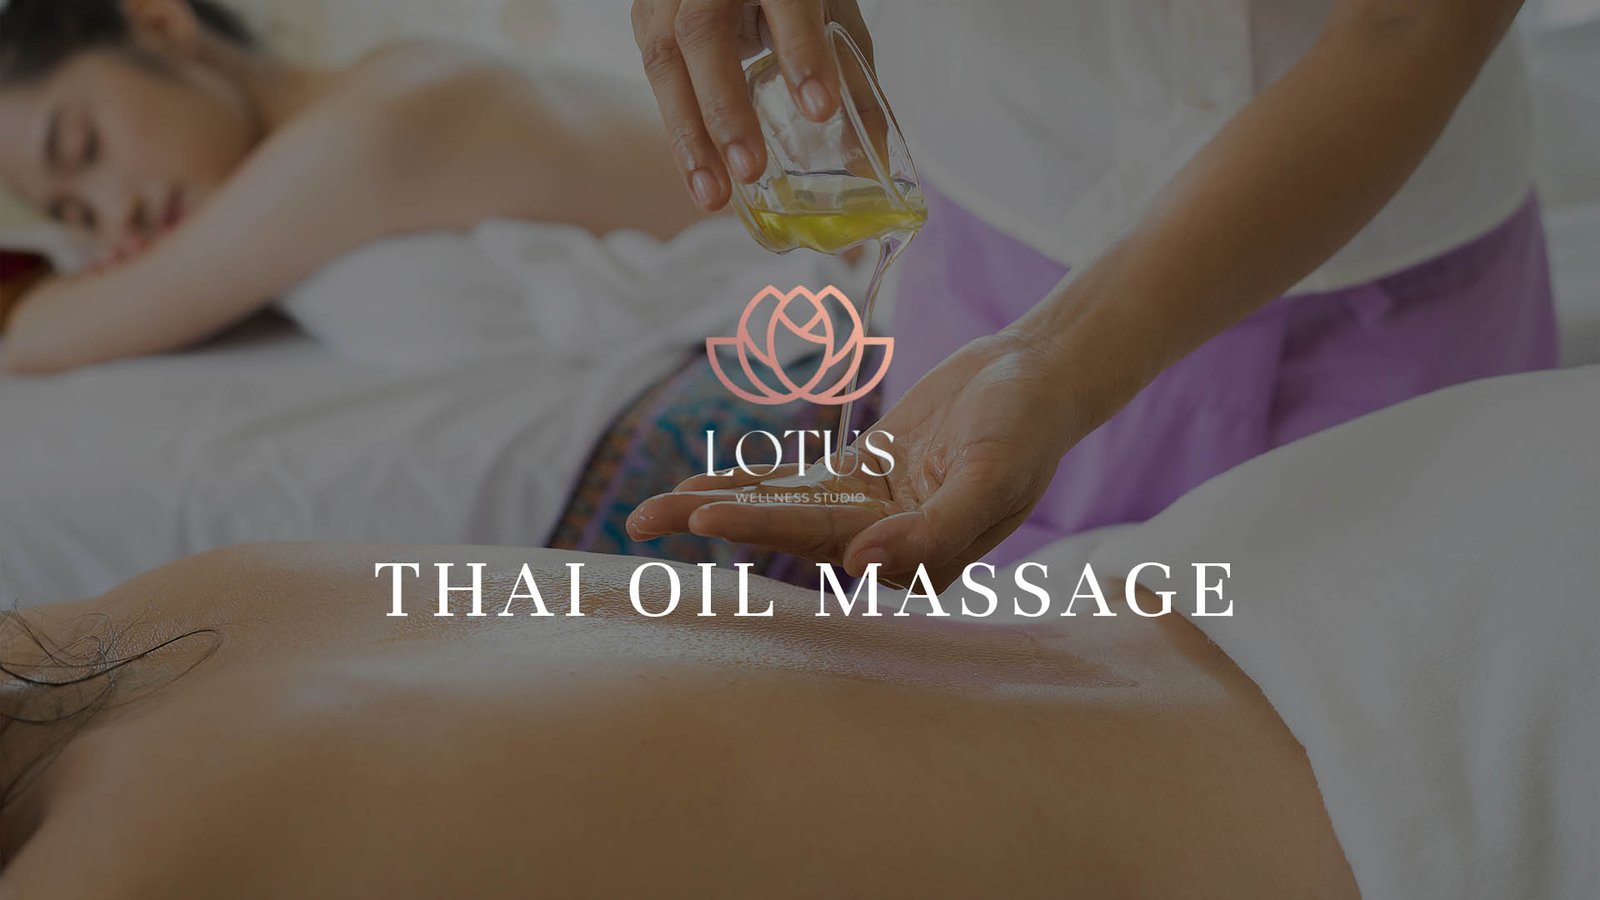 2. Thai Oil Massage